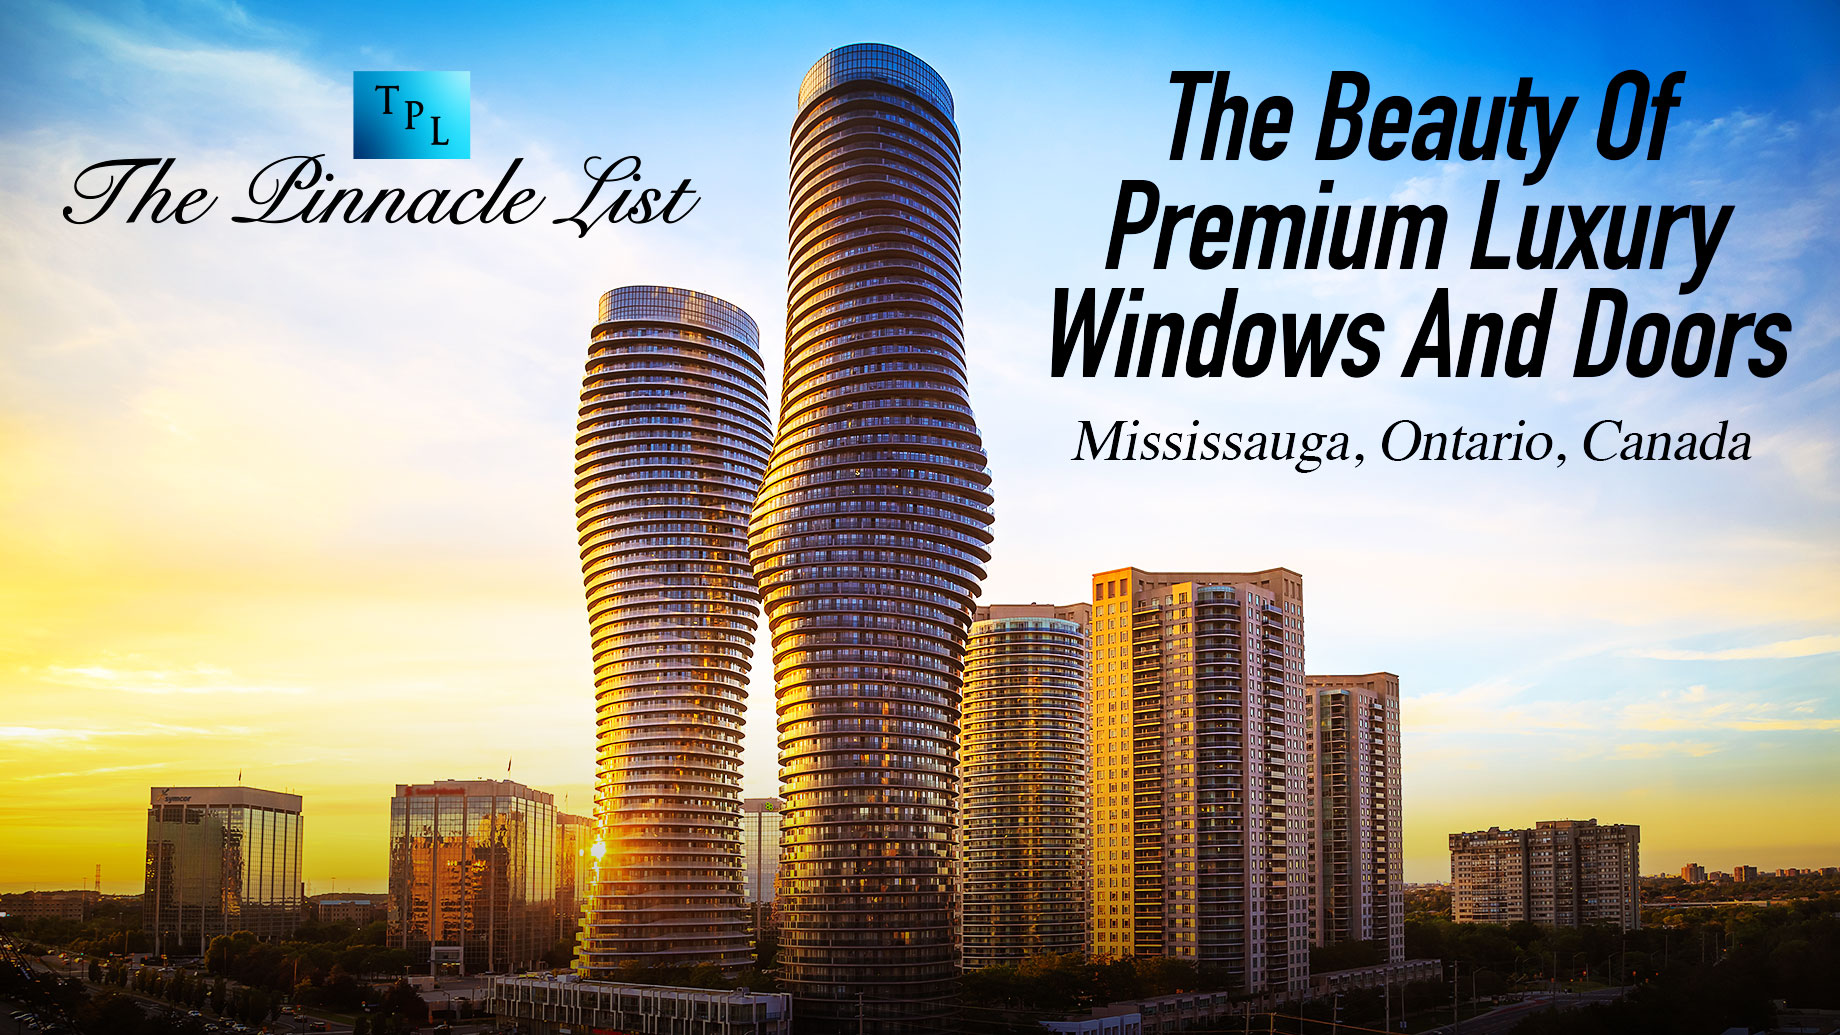 The Beauty Of Premium Luxury Windows And Doors In Mississauga, Ontario, Canada